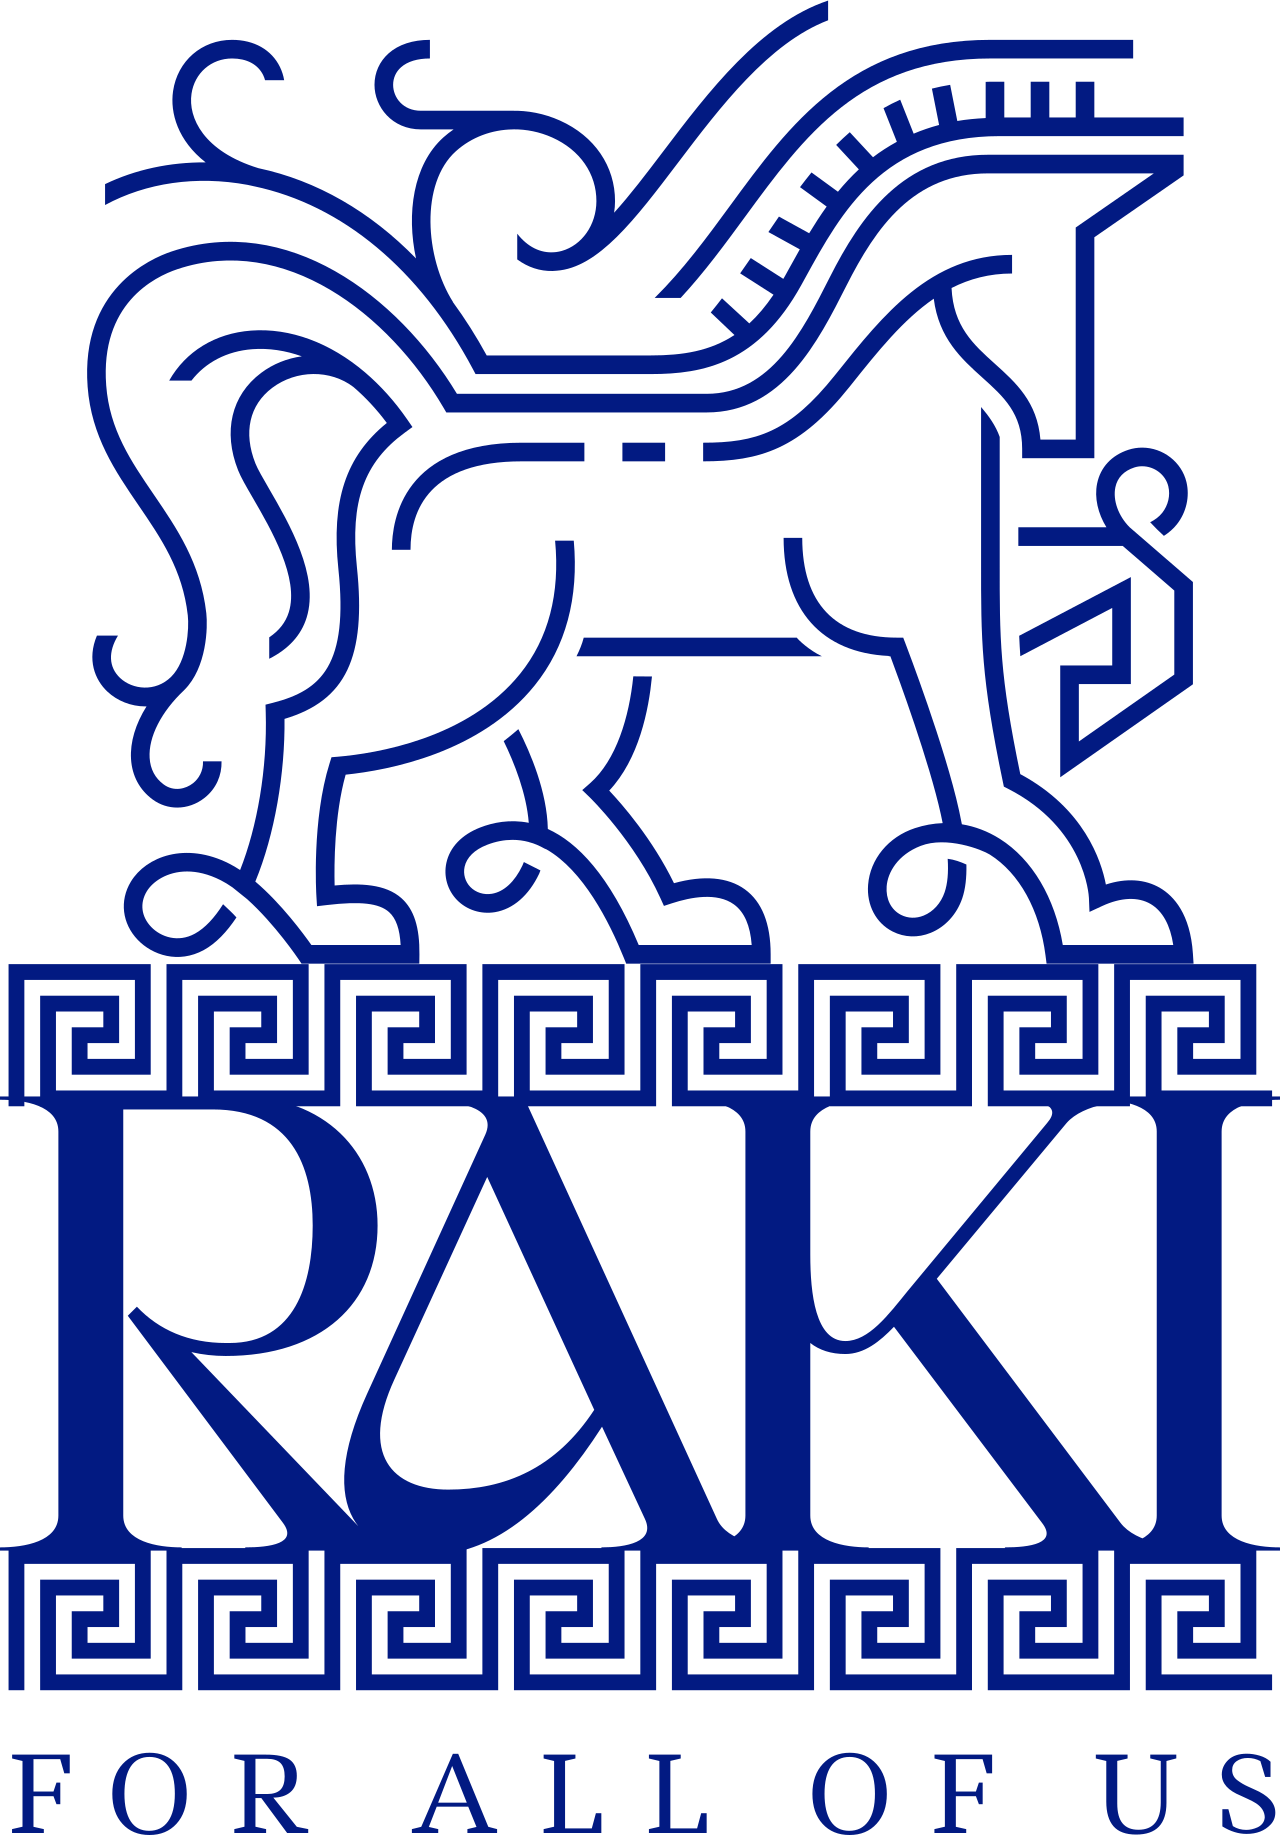 RAKI's logo